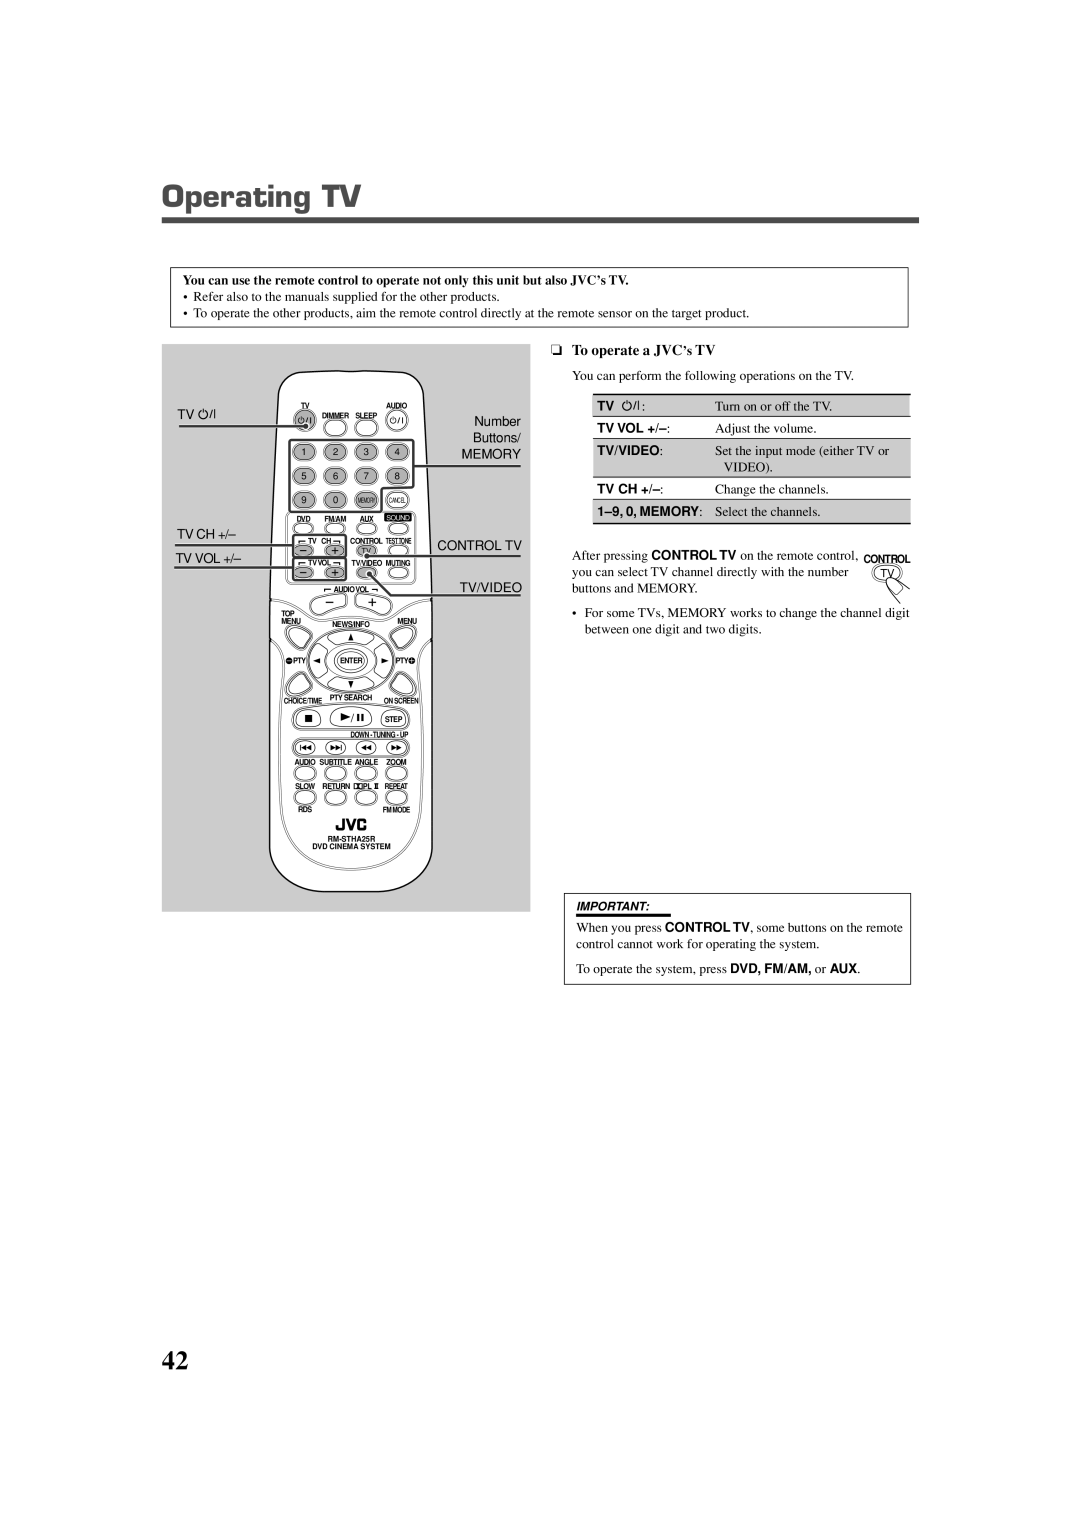 JVC TH-A25 manual Operating TV, Tv Ch +, Control Tv, Tv Vol +, Tv/Video, 1-9,0, MEMORY 